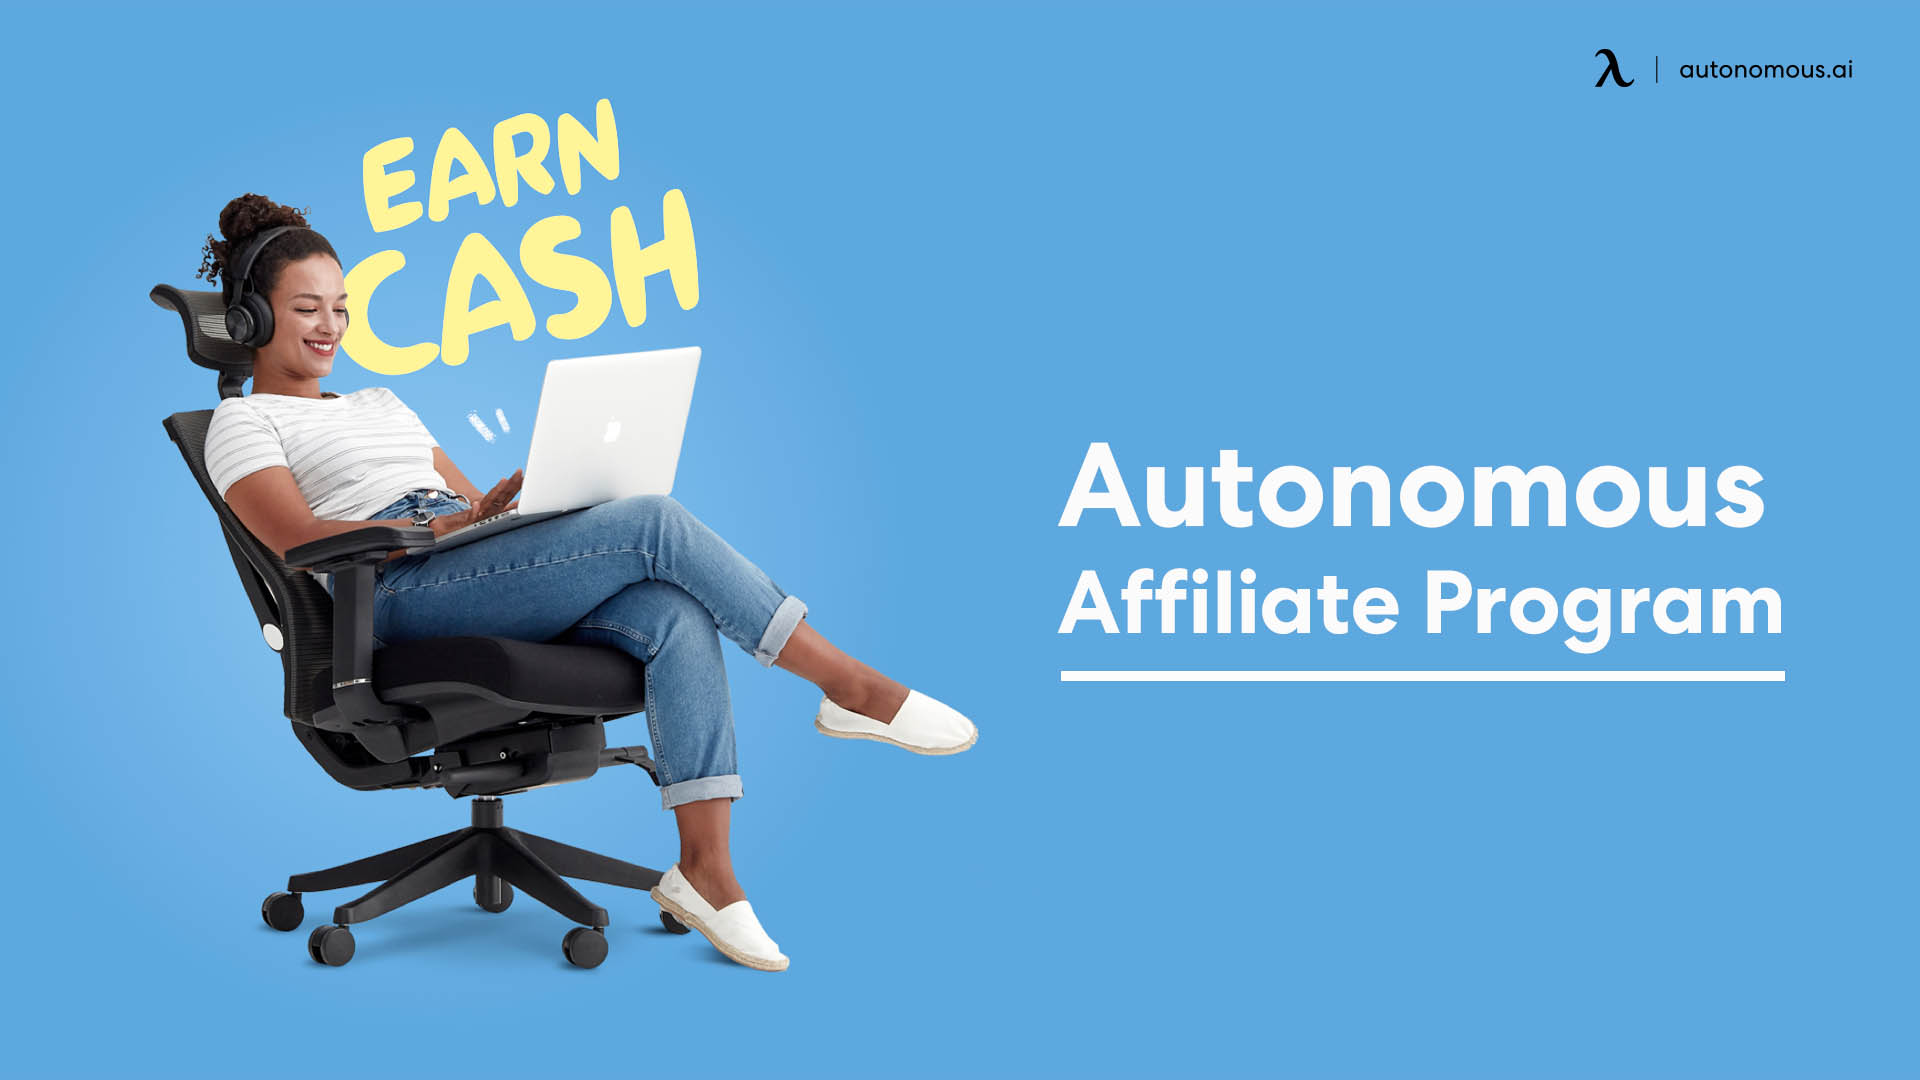 Autonomous affiliate program